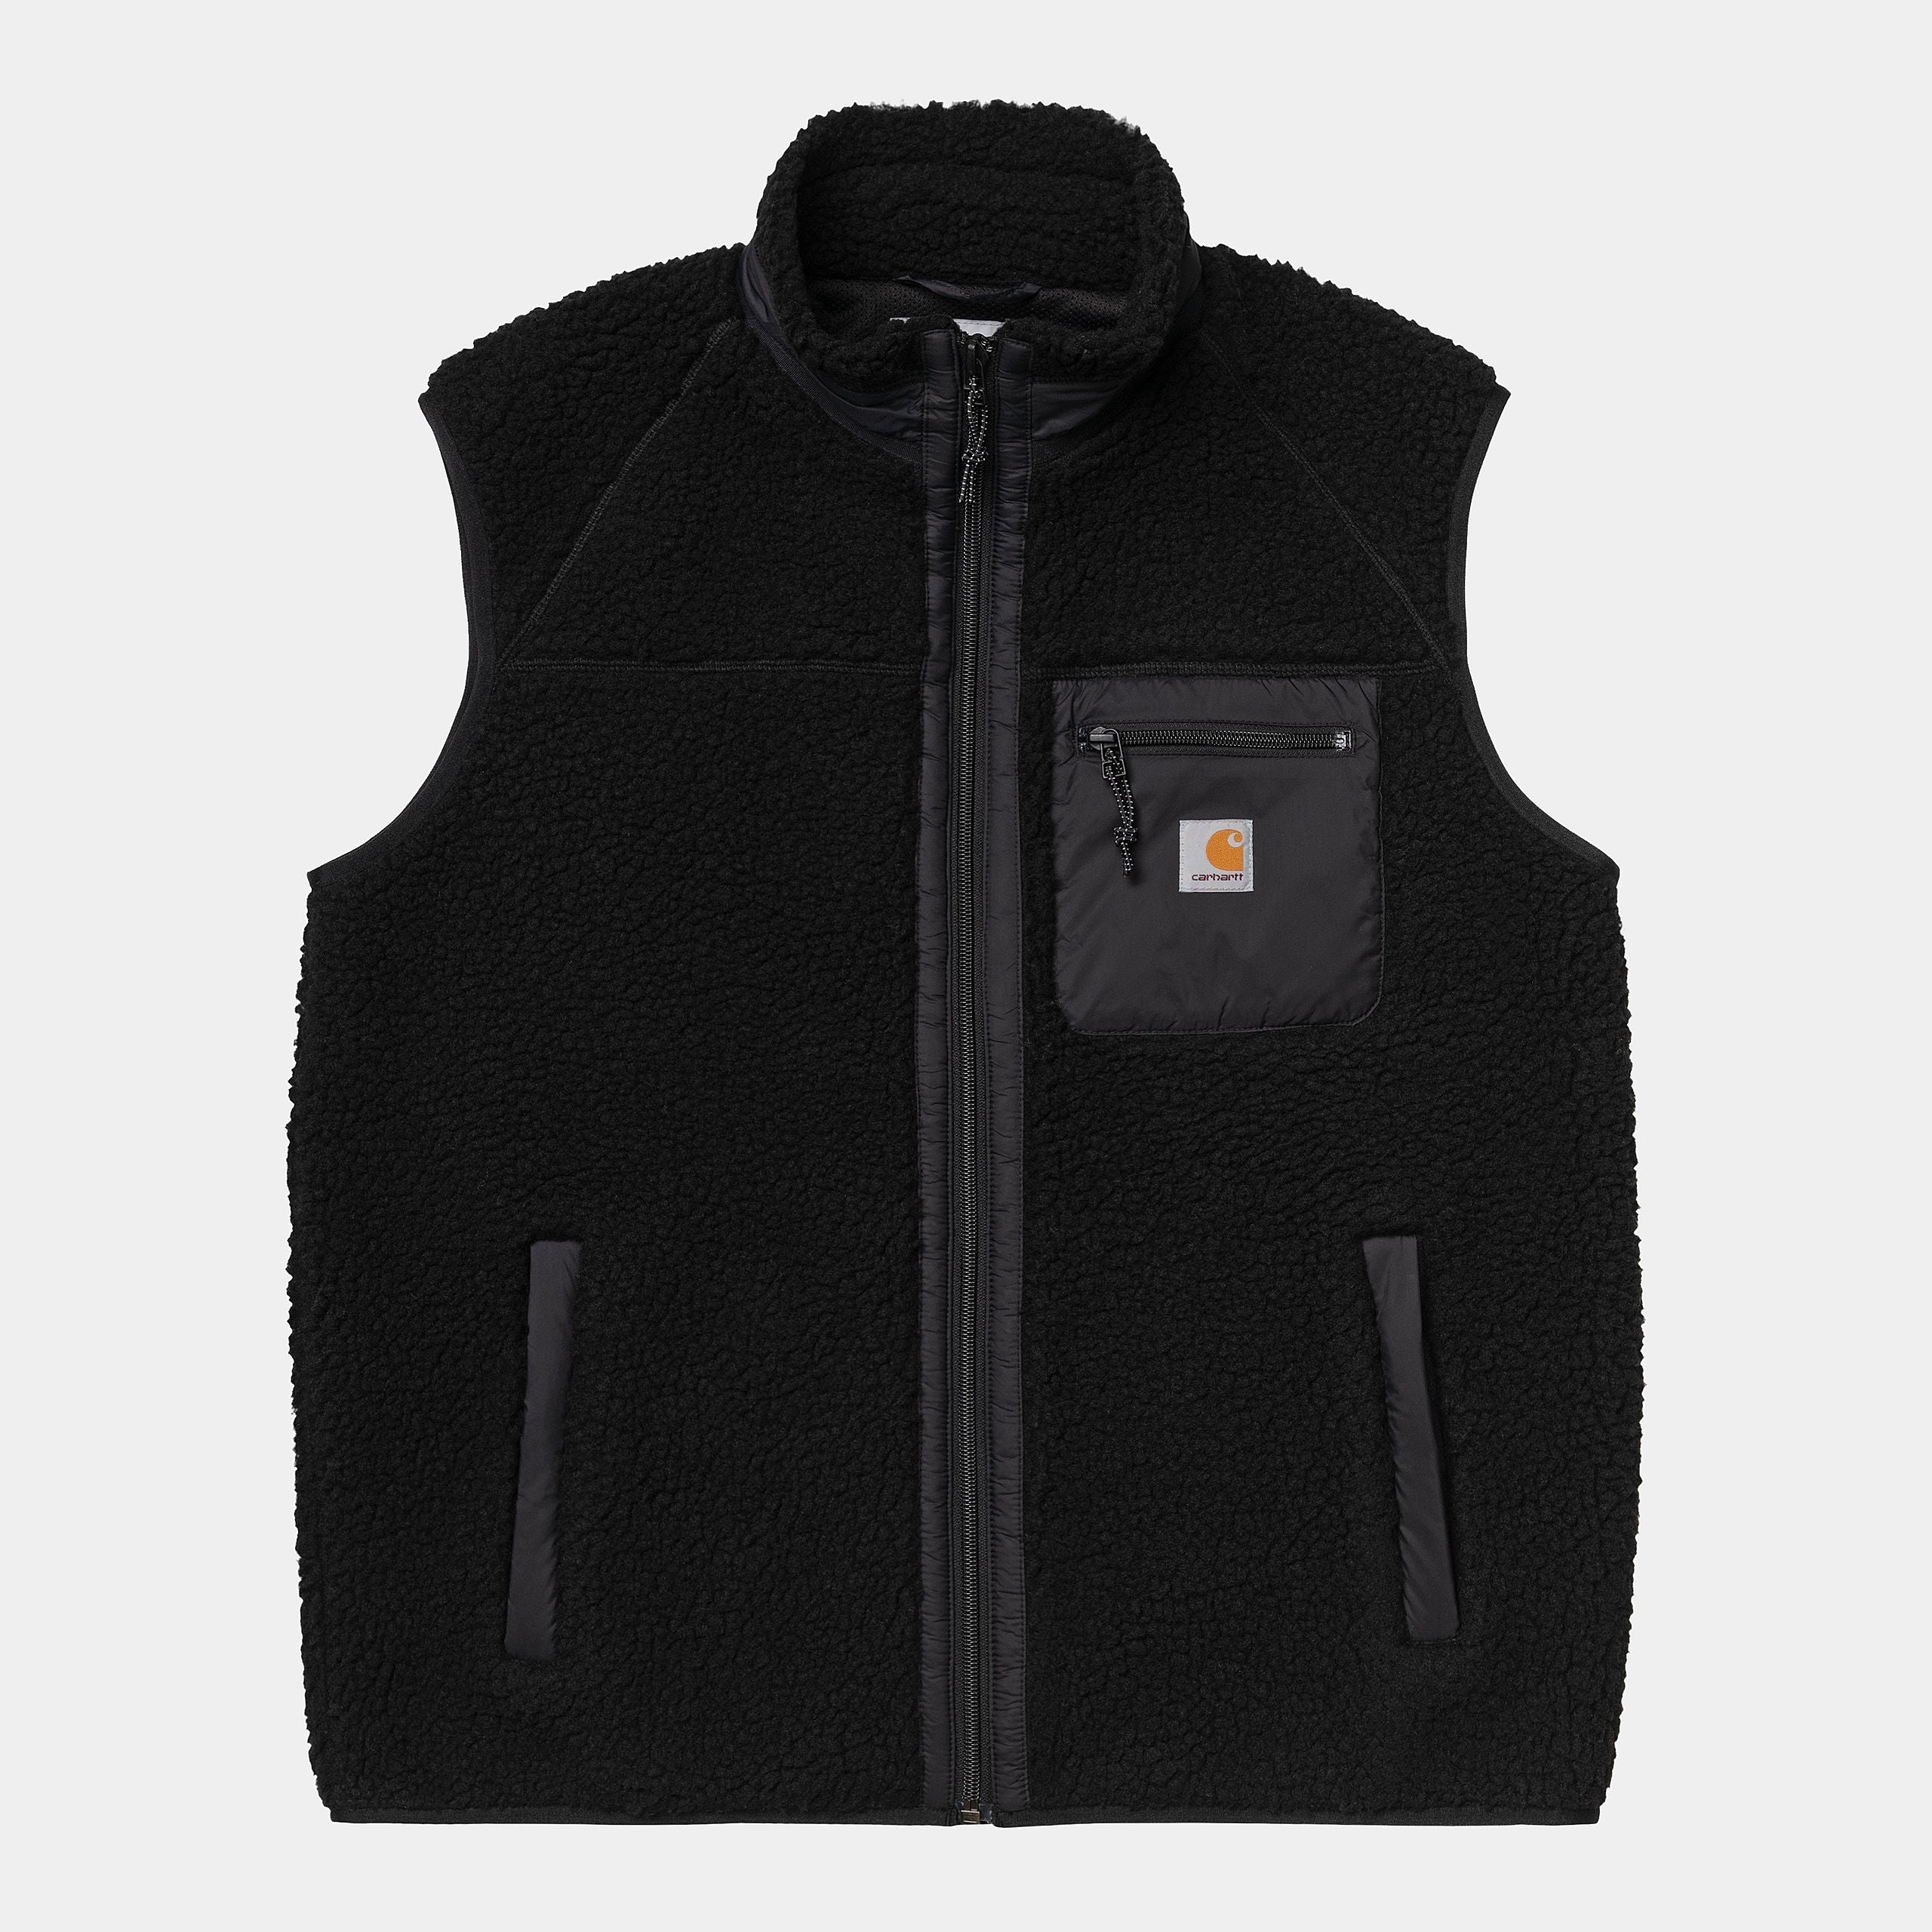 Carhartt WIP Prentis Vest Liner in Black